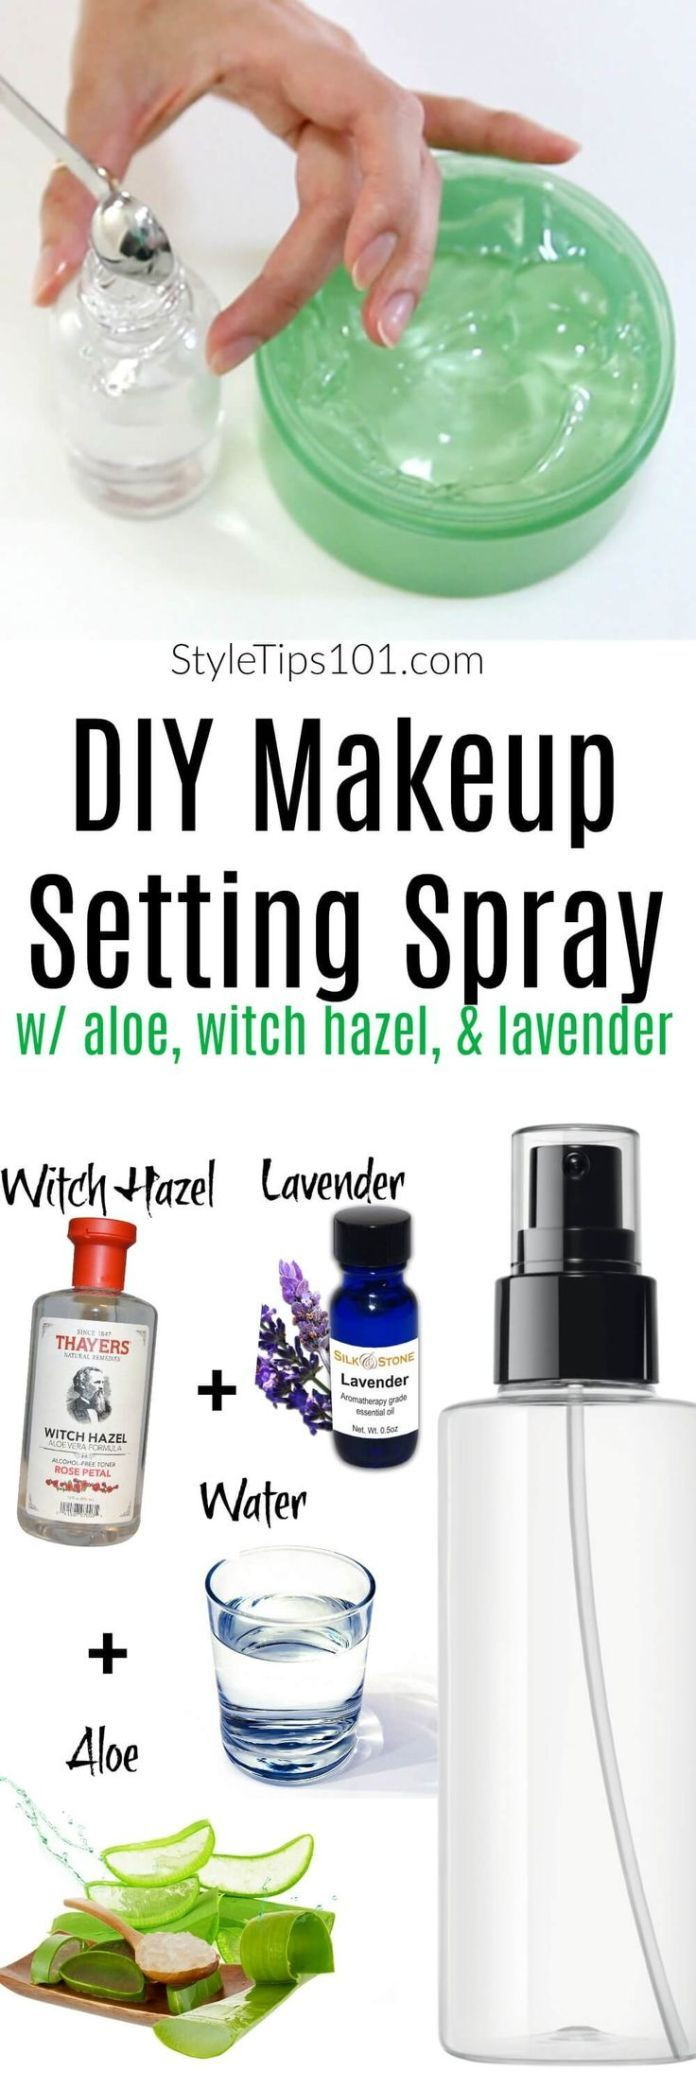 Best ideas about DIY Setting Spray
. Save or Pin Idée pour DIY Masque Natural & DIY Skin Care DIY Now.